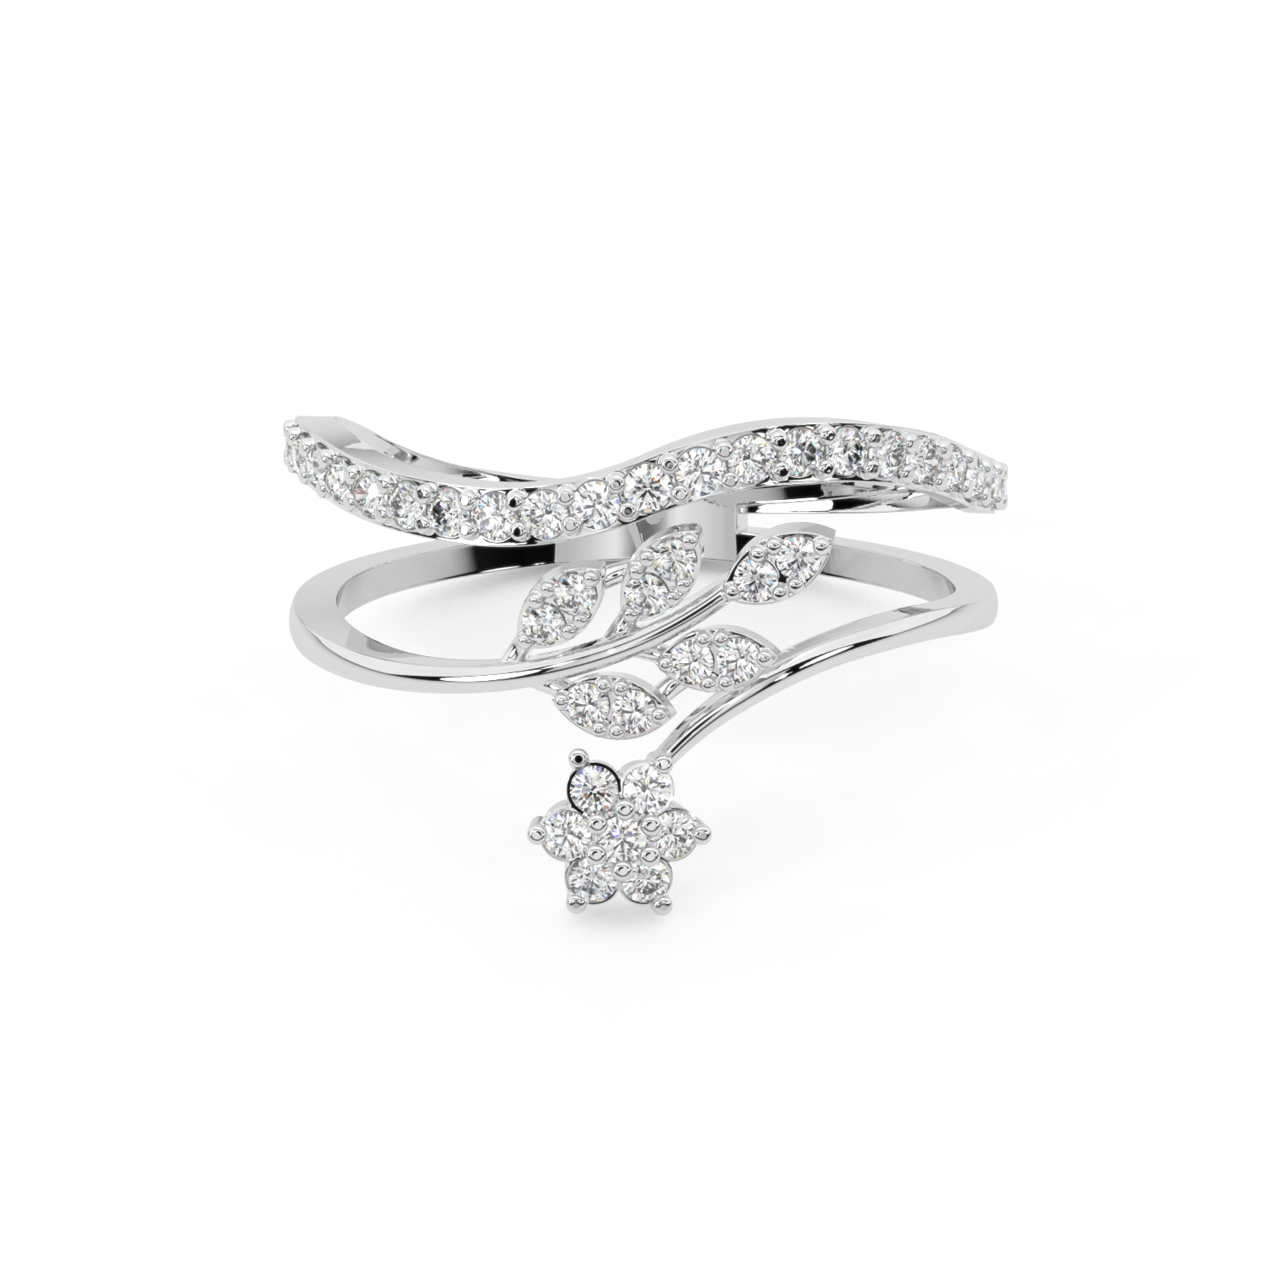 Twinkling Round Diamond Engagement Ring